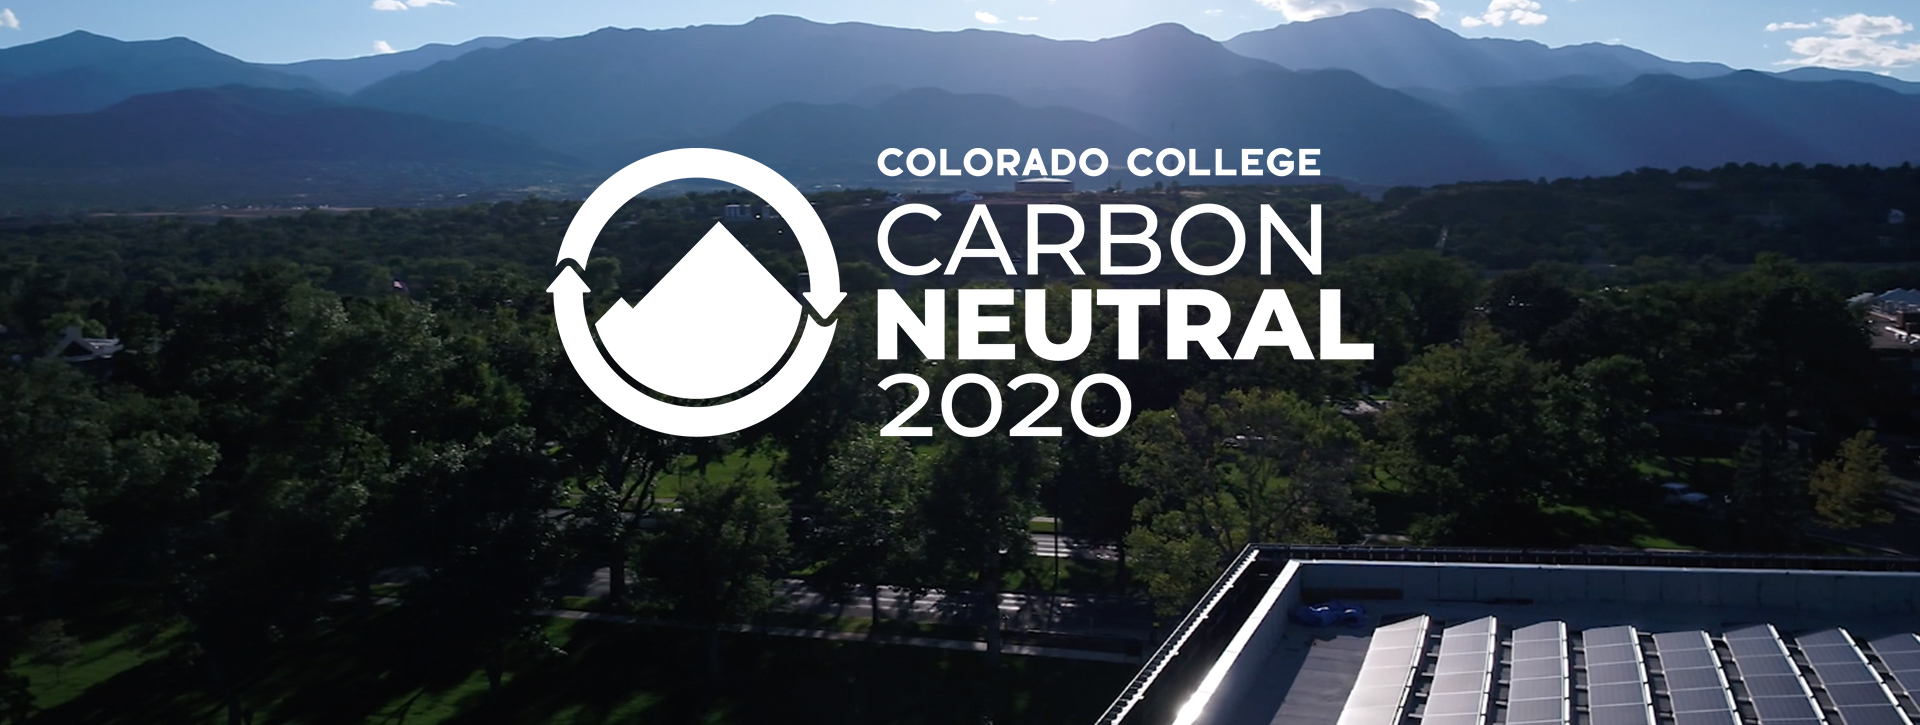 Colorado College is Carbon Neutral!